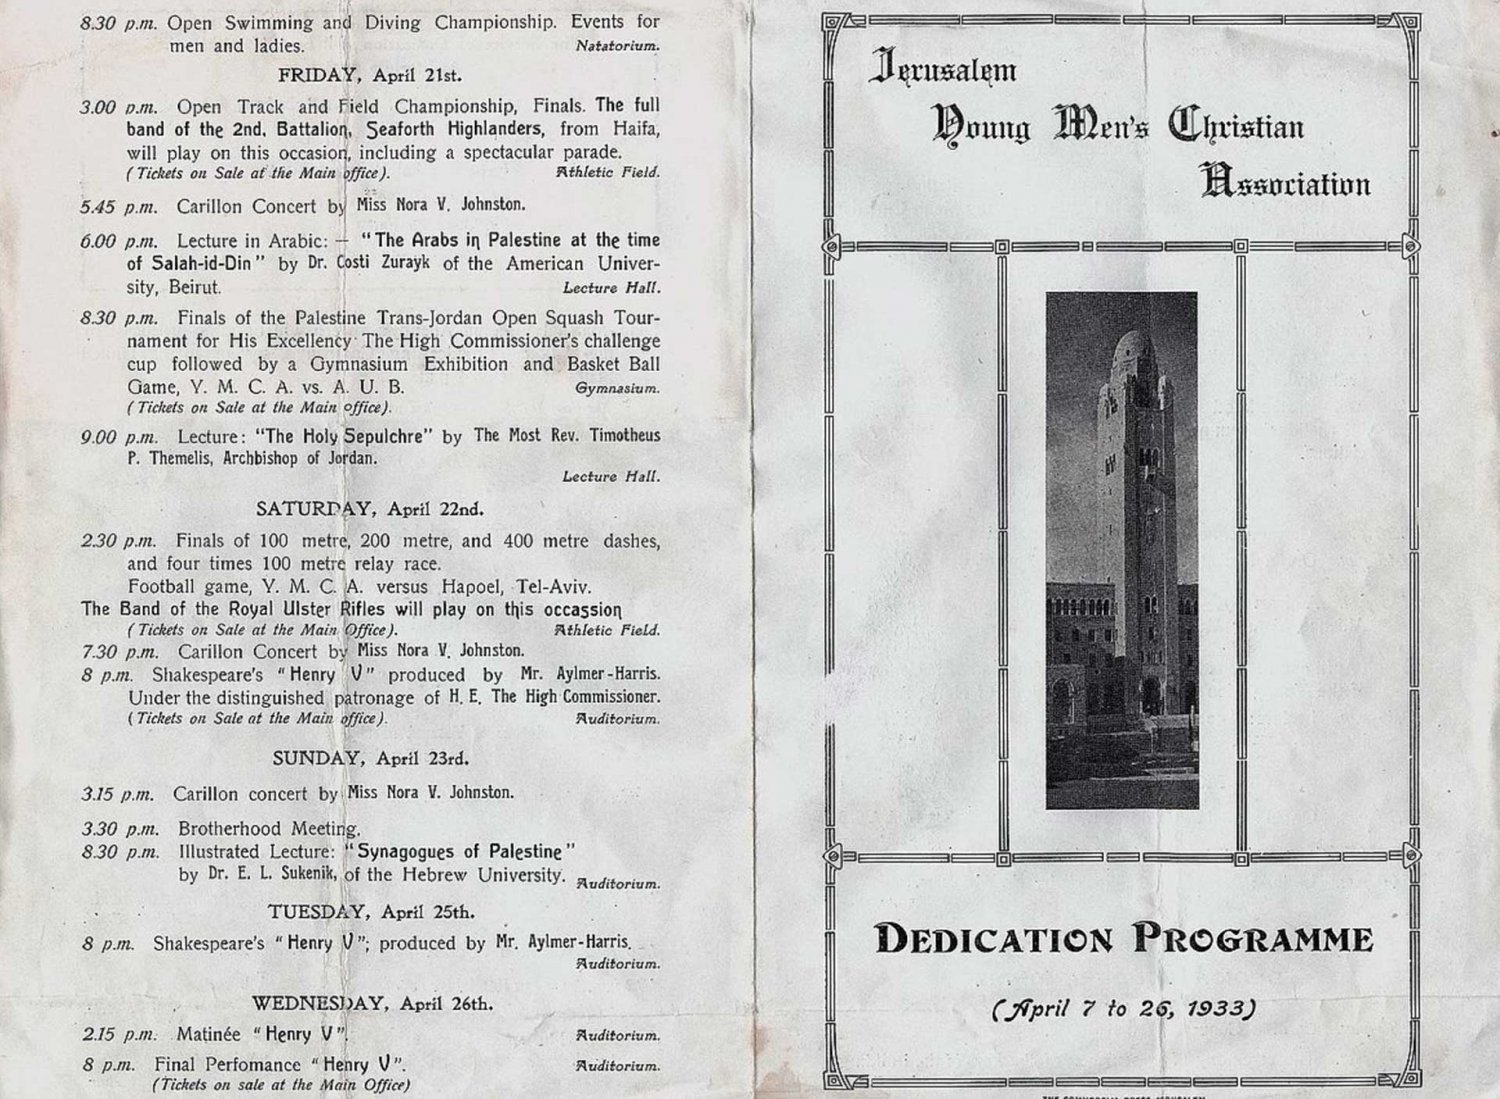 Dedication program for the new Jerusalem YMCA, April 1933